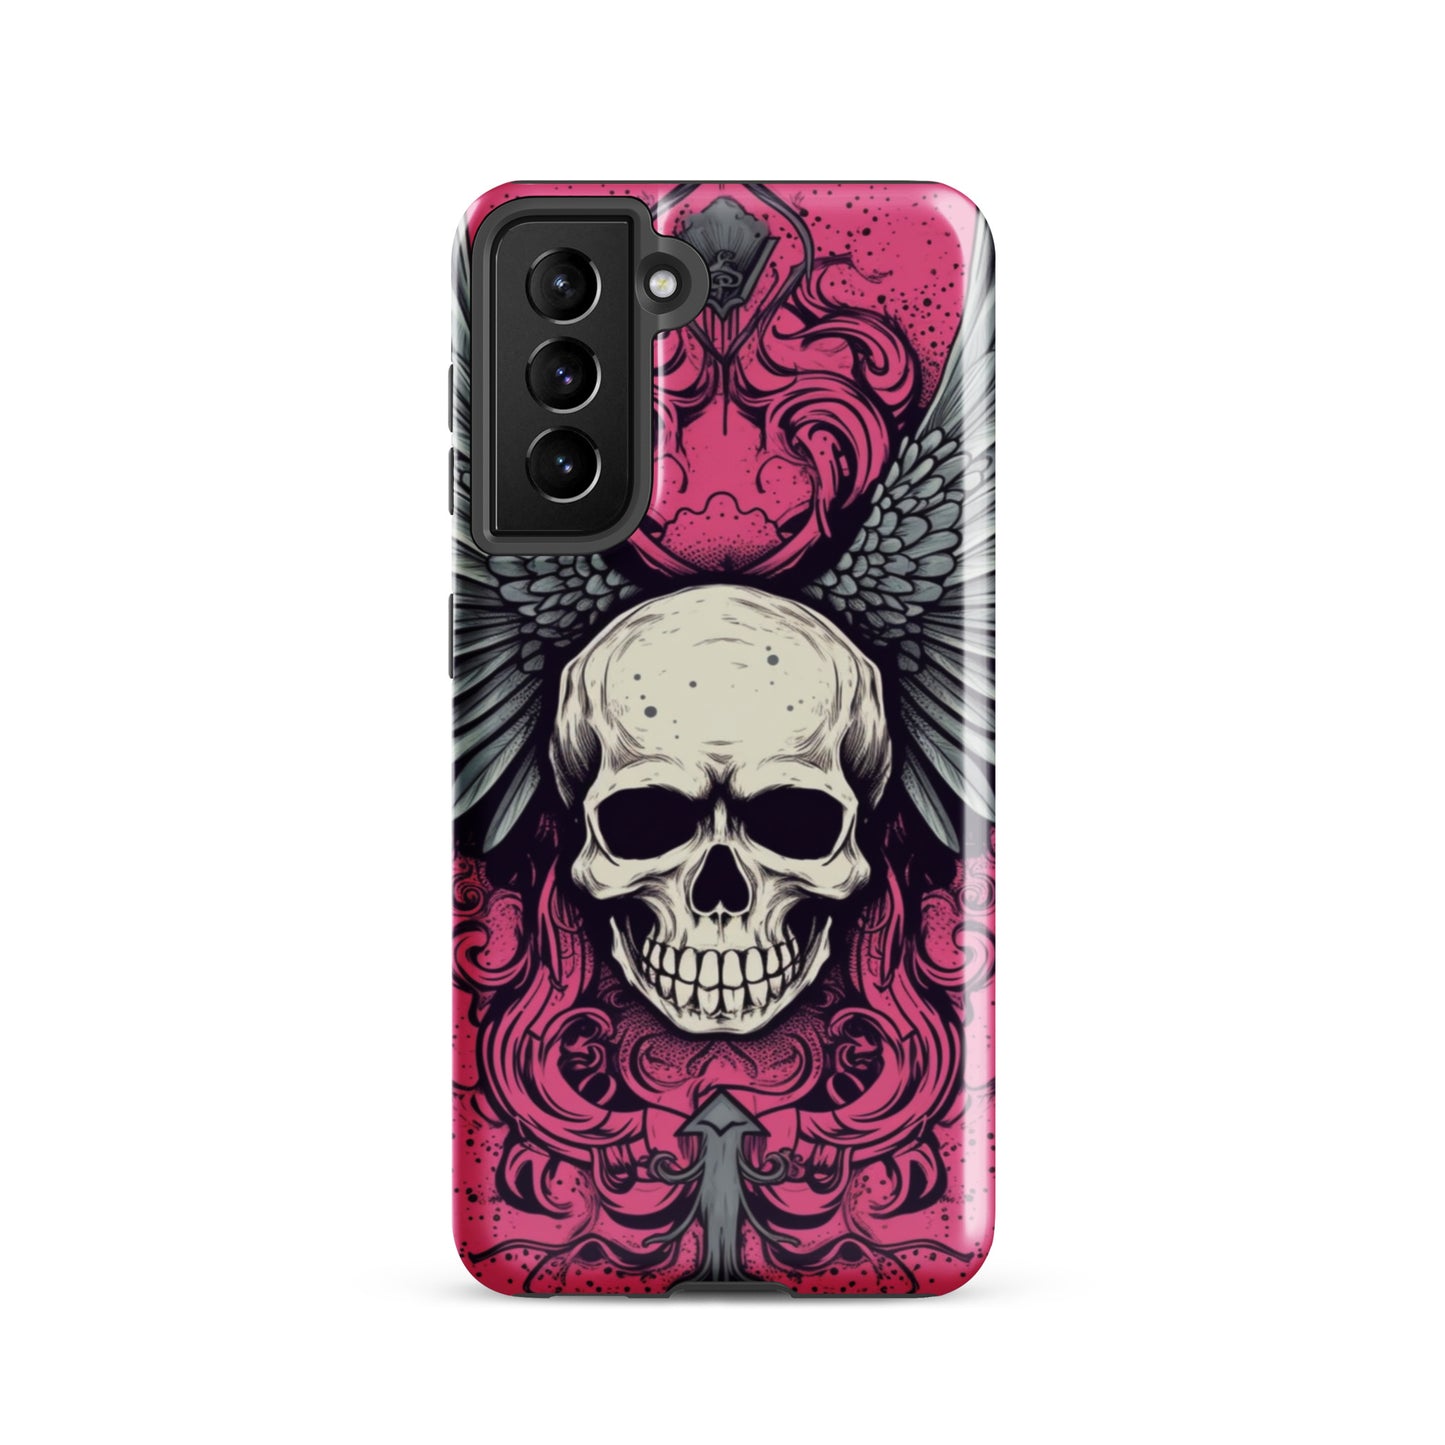 Skull Tough Case, Shockproof Phone Case,Cool Designed Phone Cases, Pocket-friendly